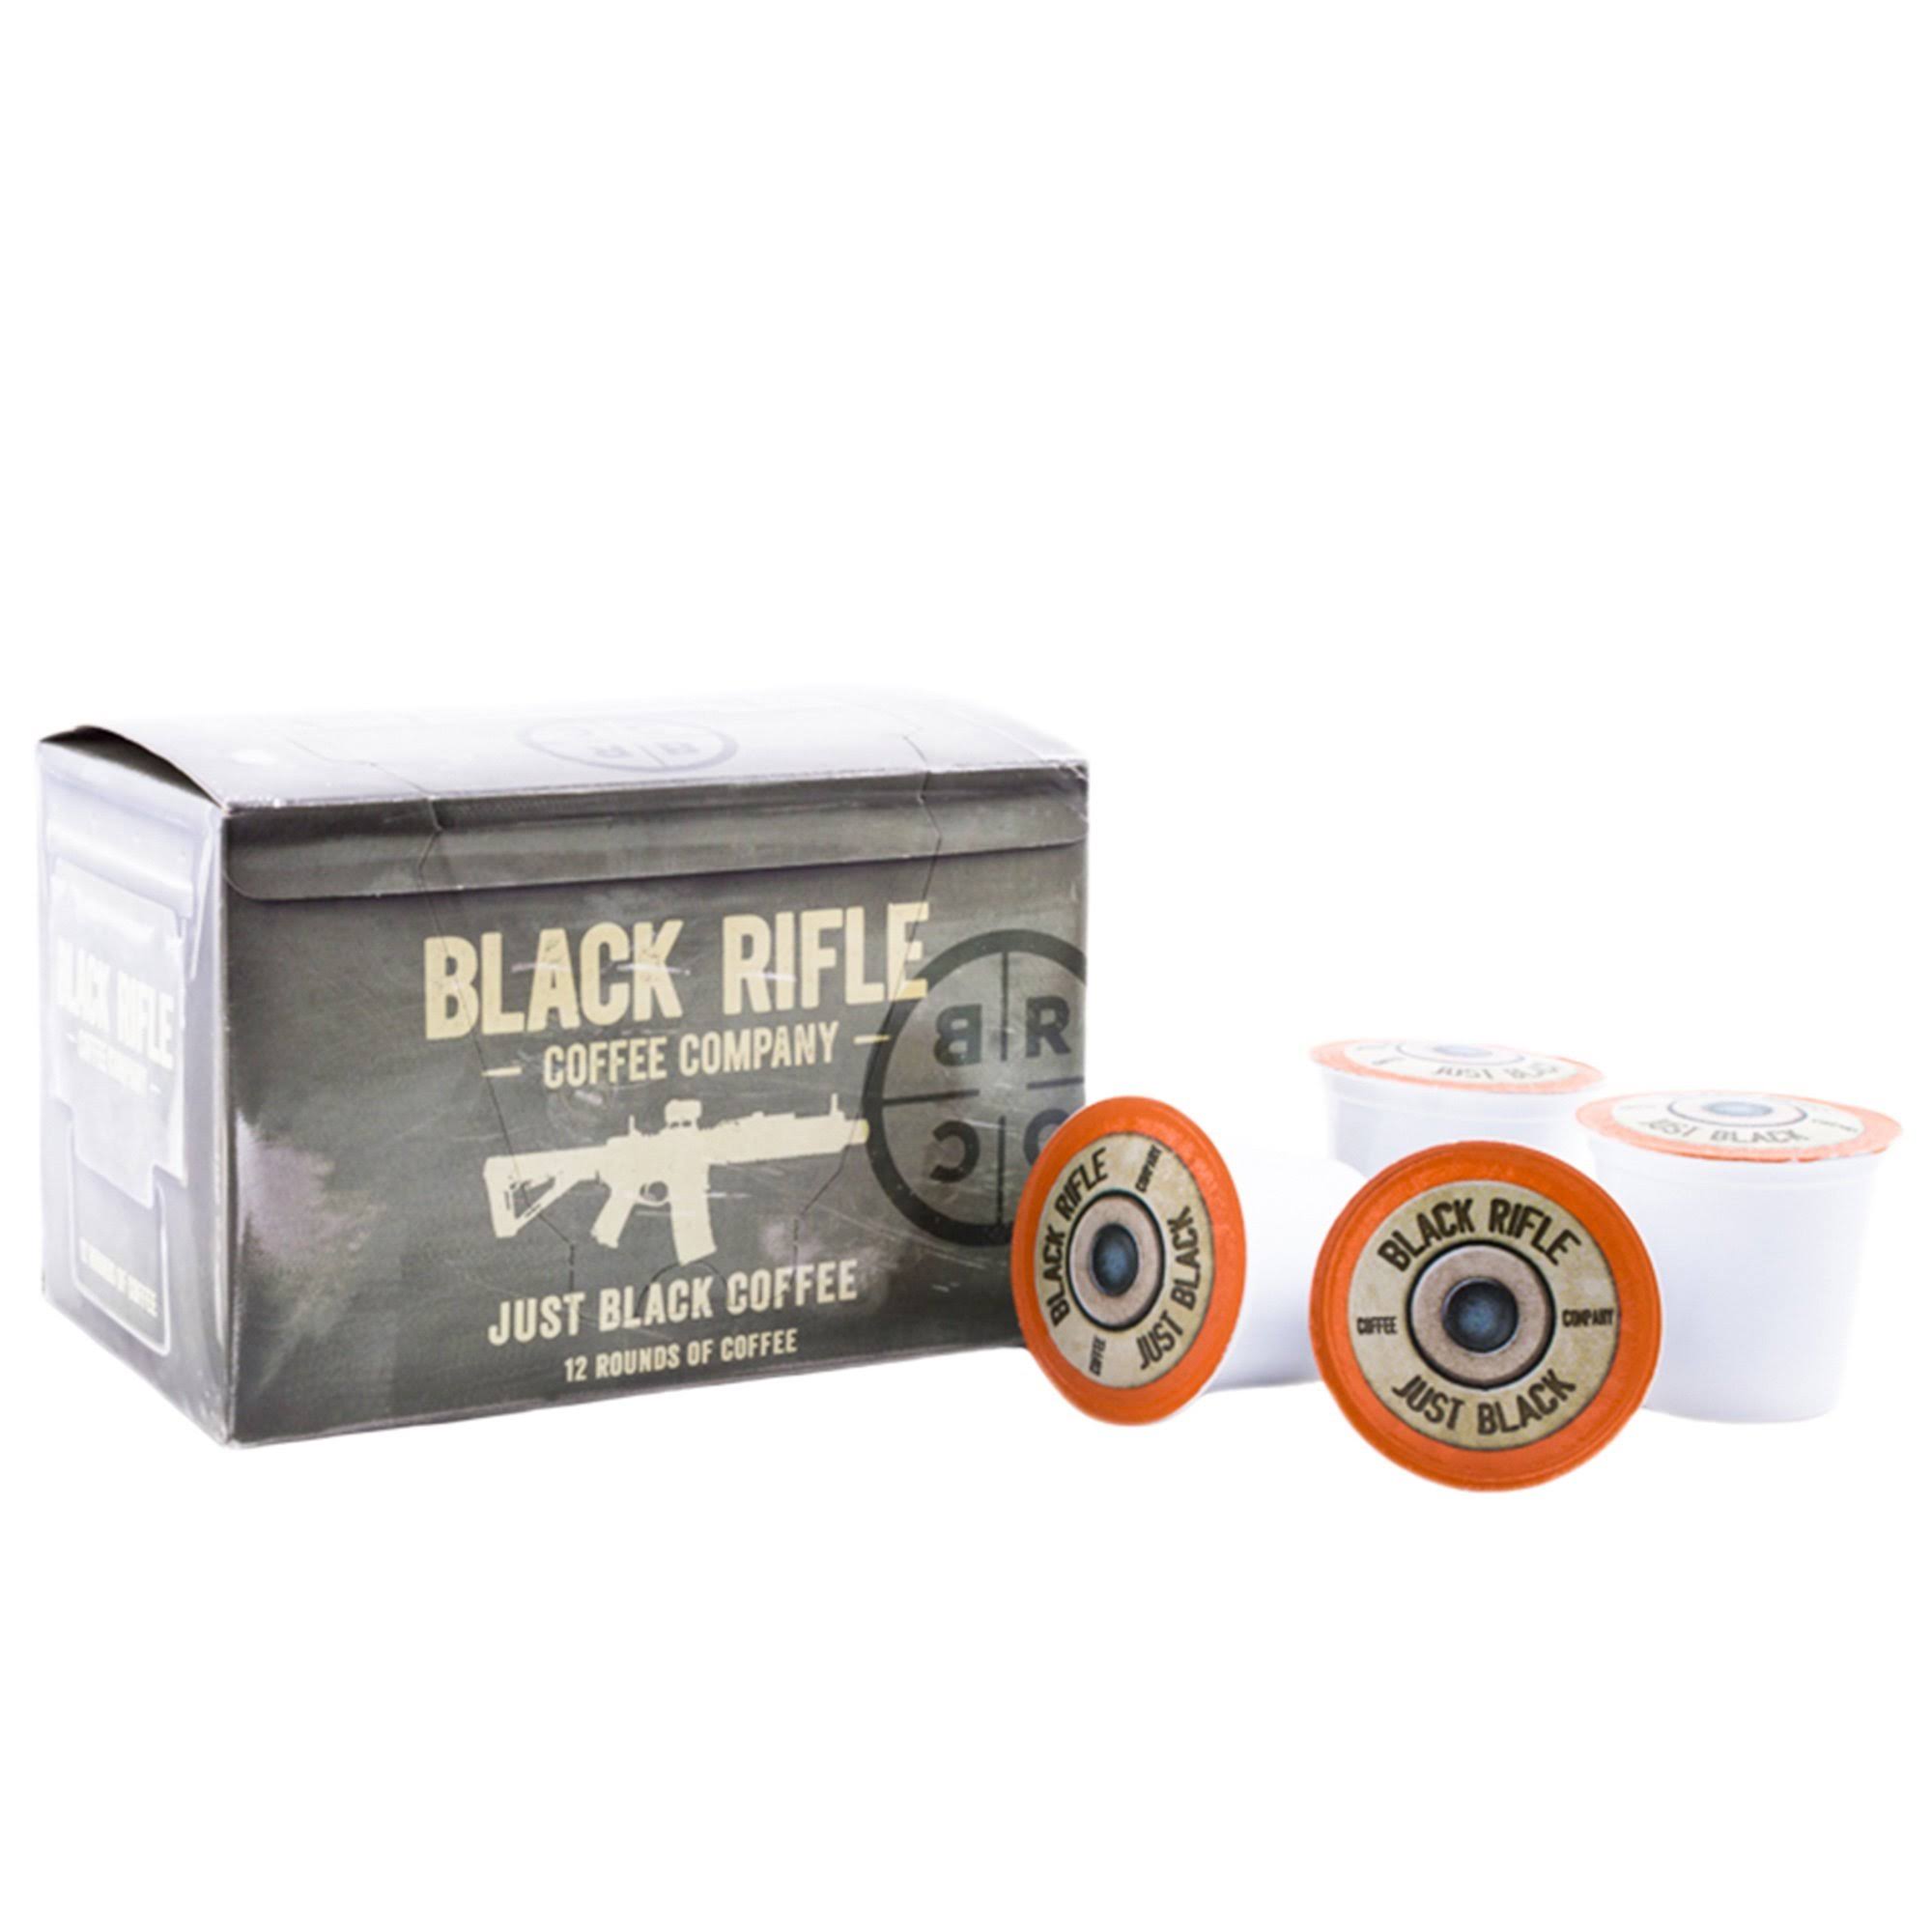 Black Rifle Coffee Company JB Just Black Coffee - 12 Rounds Of Coffee